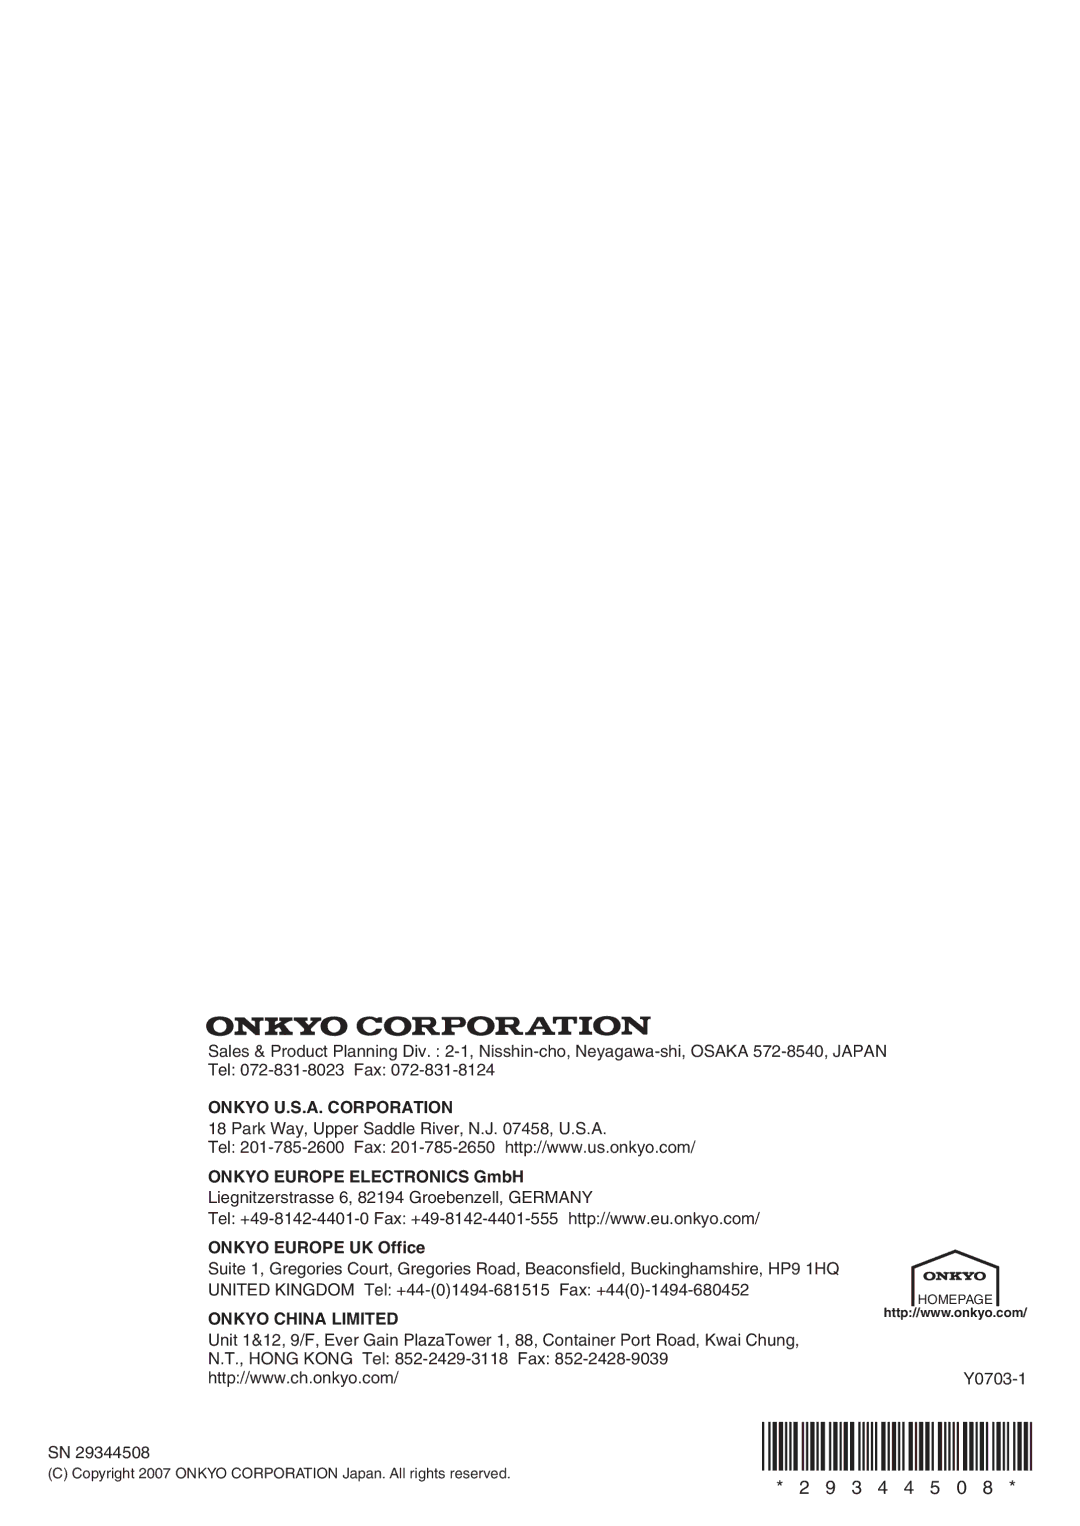 Onkyo DV-SP305 instruction manual Onkyo Europe Electronics GmbH, Onkyo Europe UK Office 